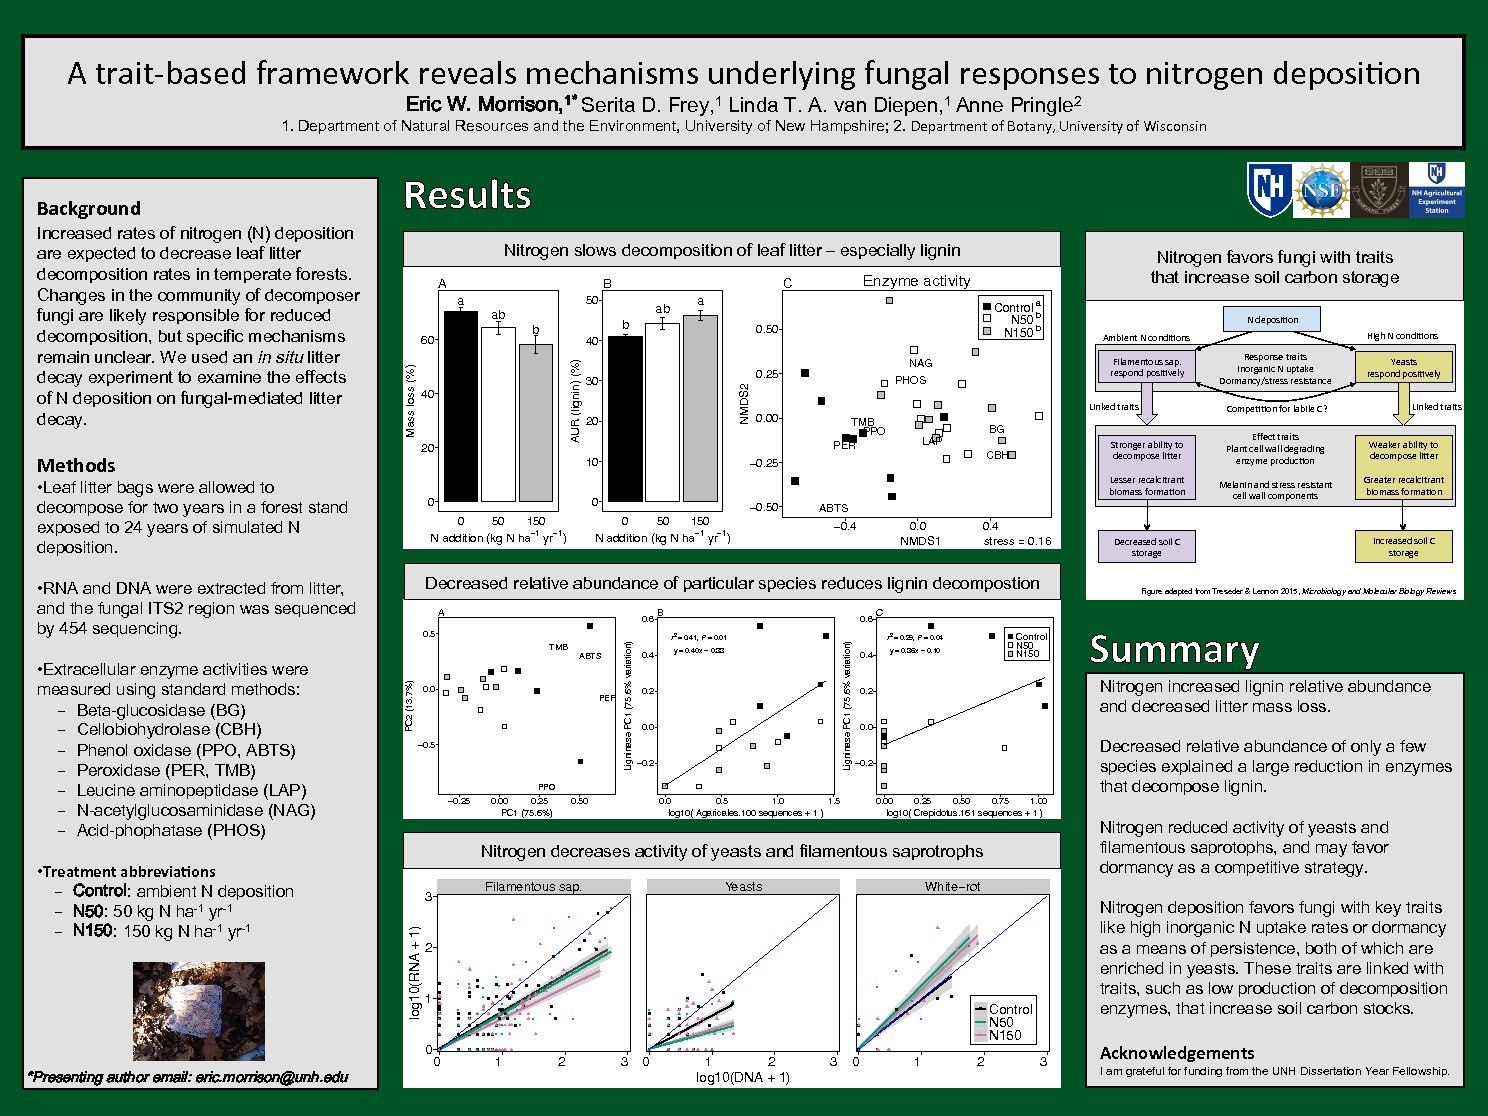 A Trait-Based Framework Reveals Mechanisms Underlying Fungal Responses To Nitrogen Deposition  by ewj44